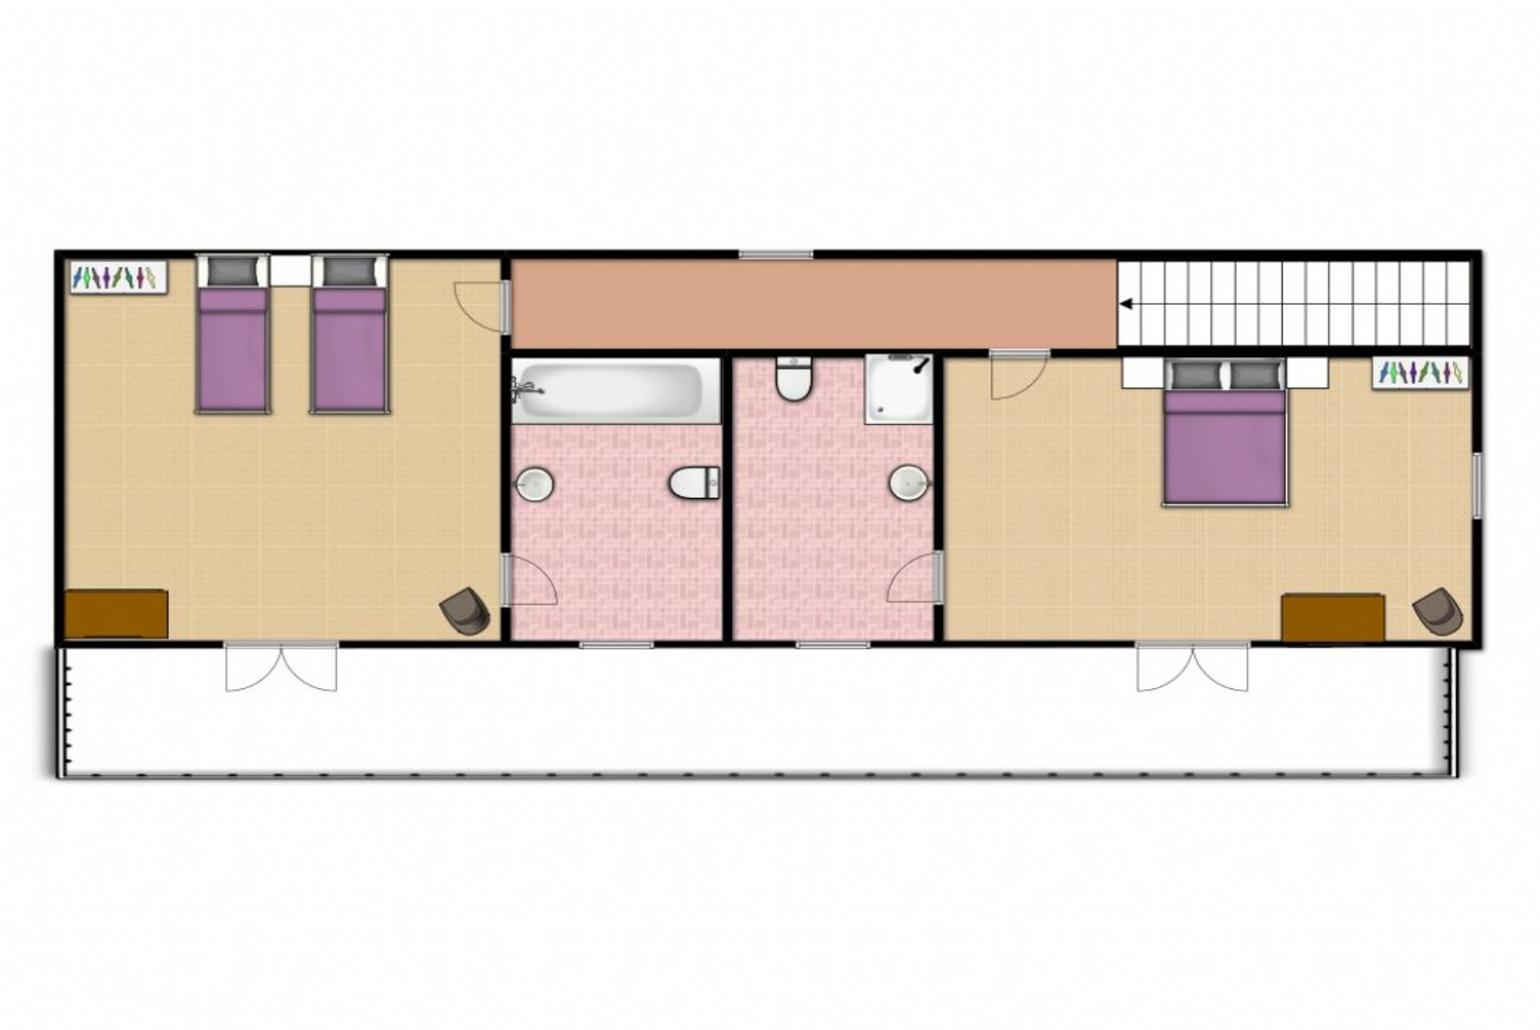 Floorplan of first level